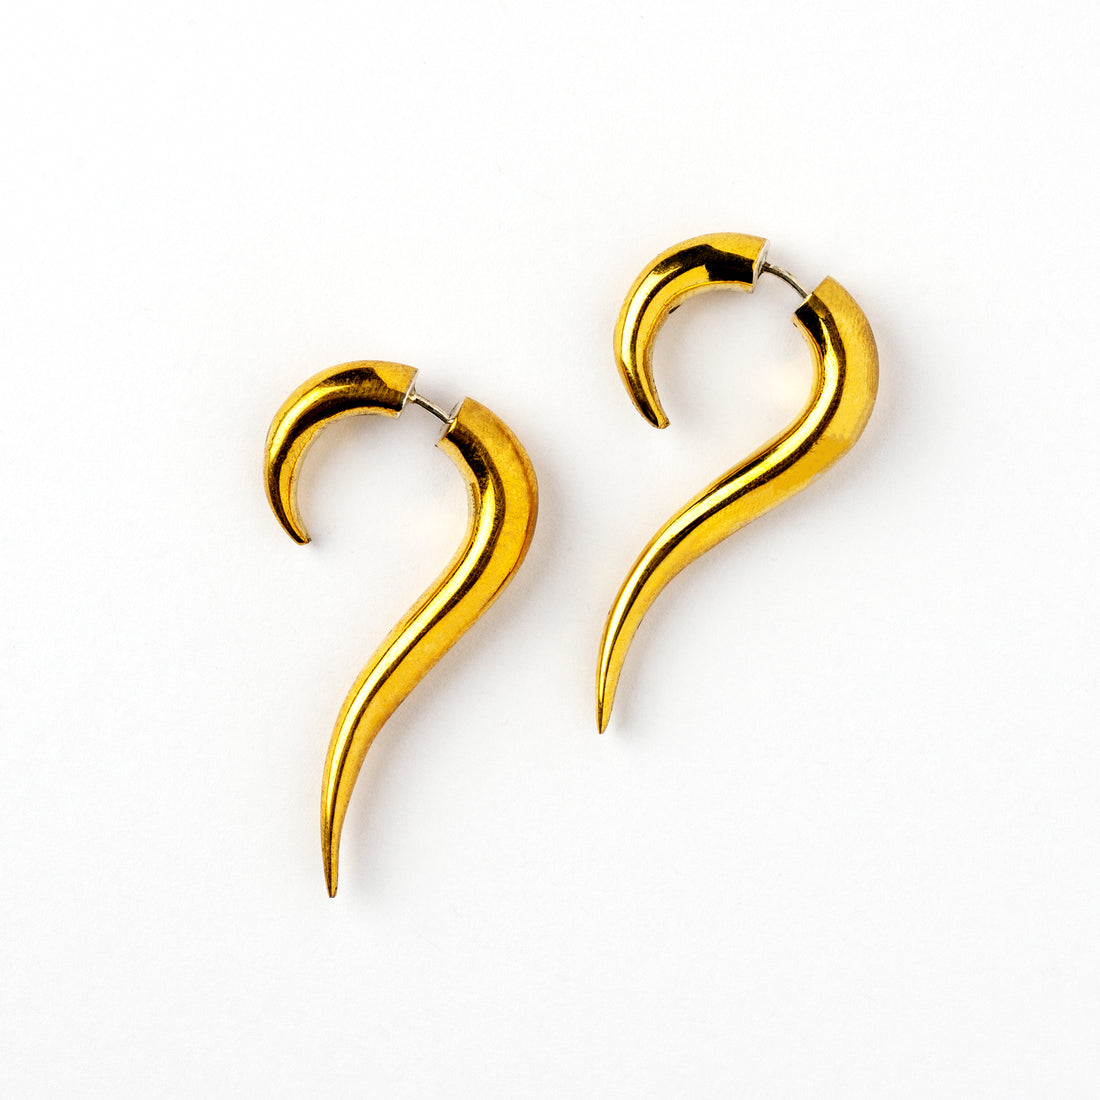 pair of Maui Brass Fake Gauge Earrings side view